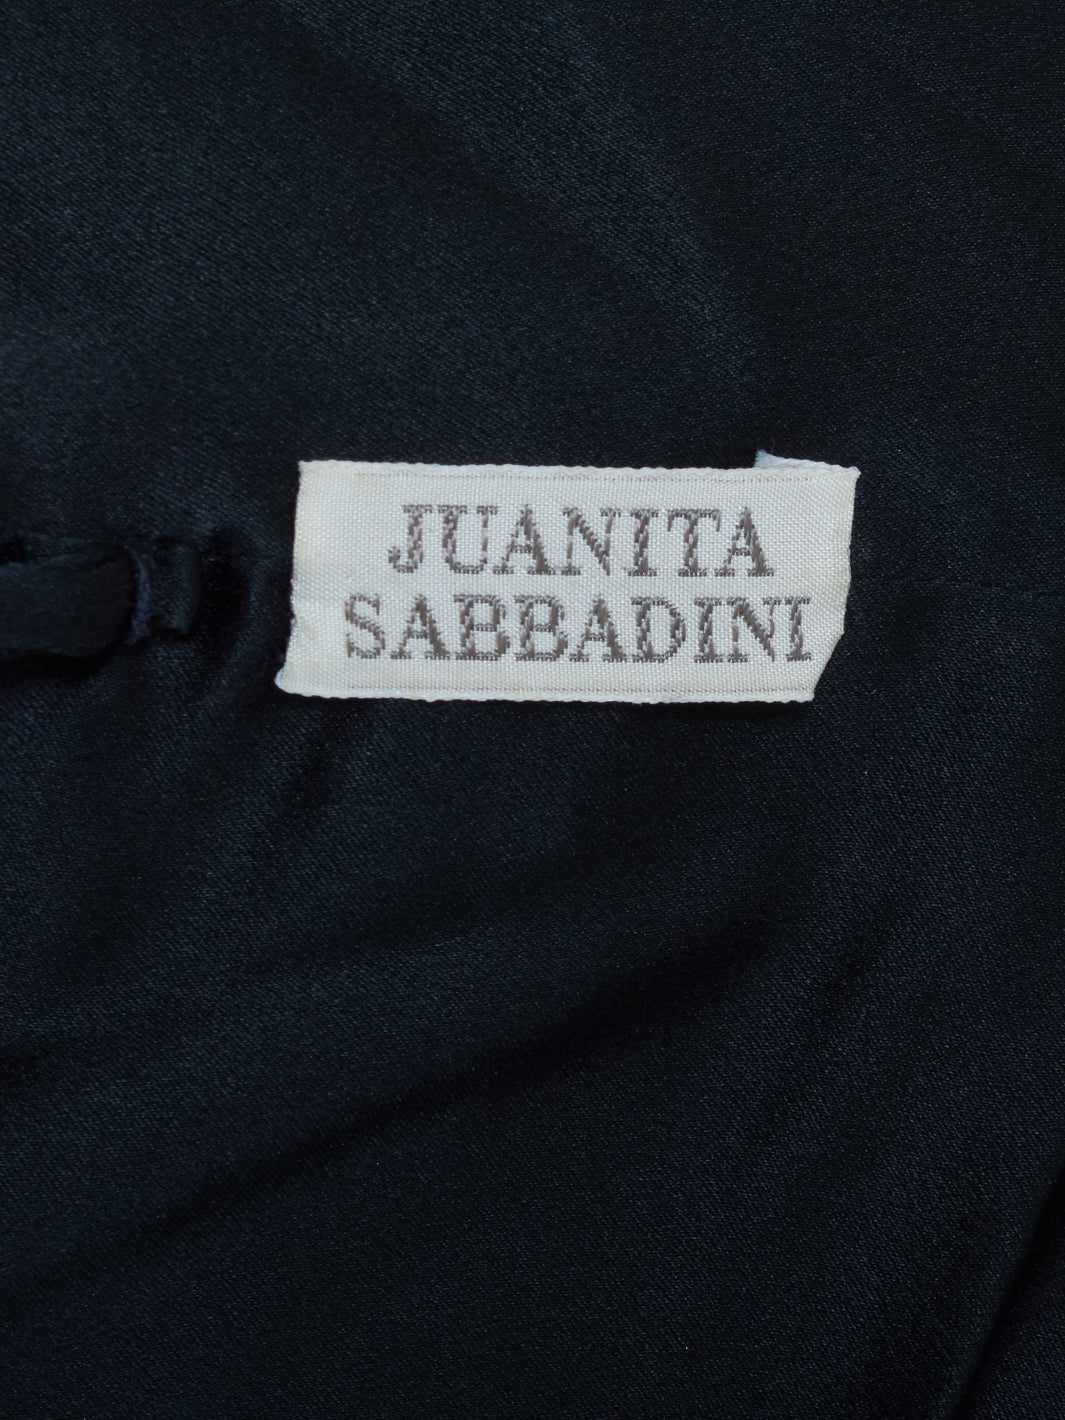 Juanita Sabbadini Polka Dot Suit